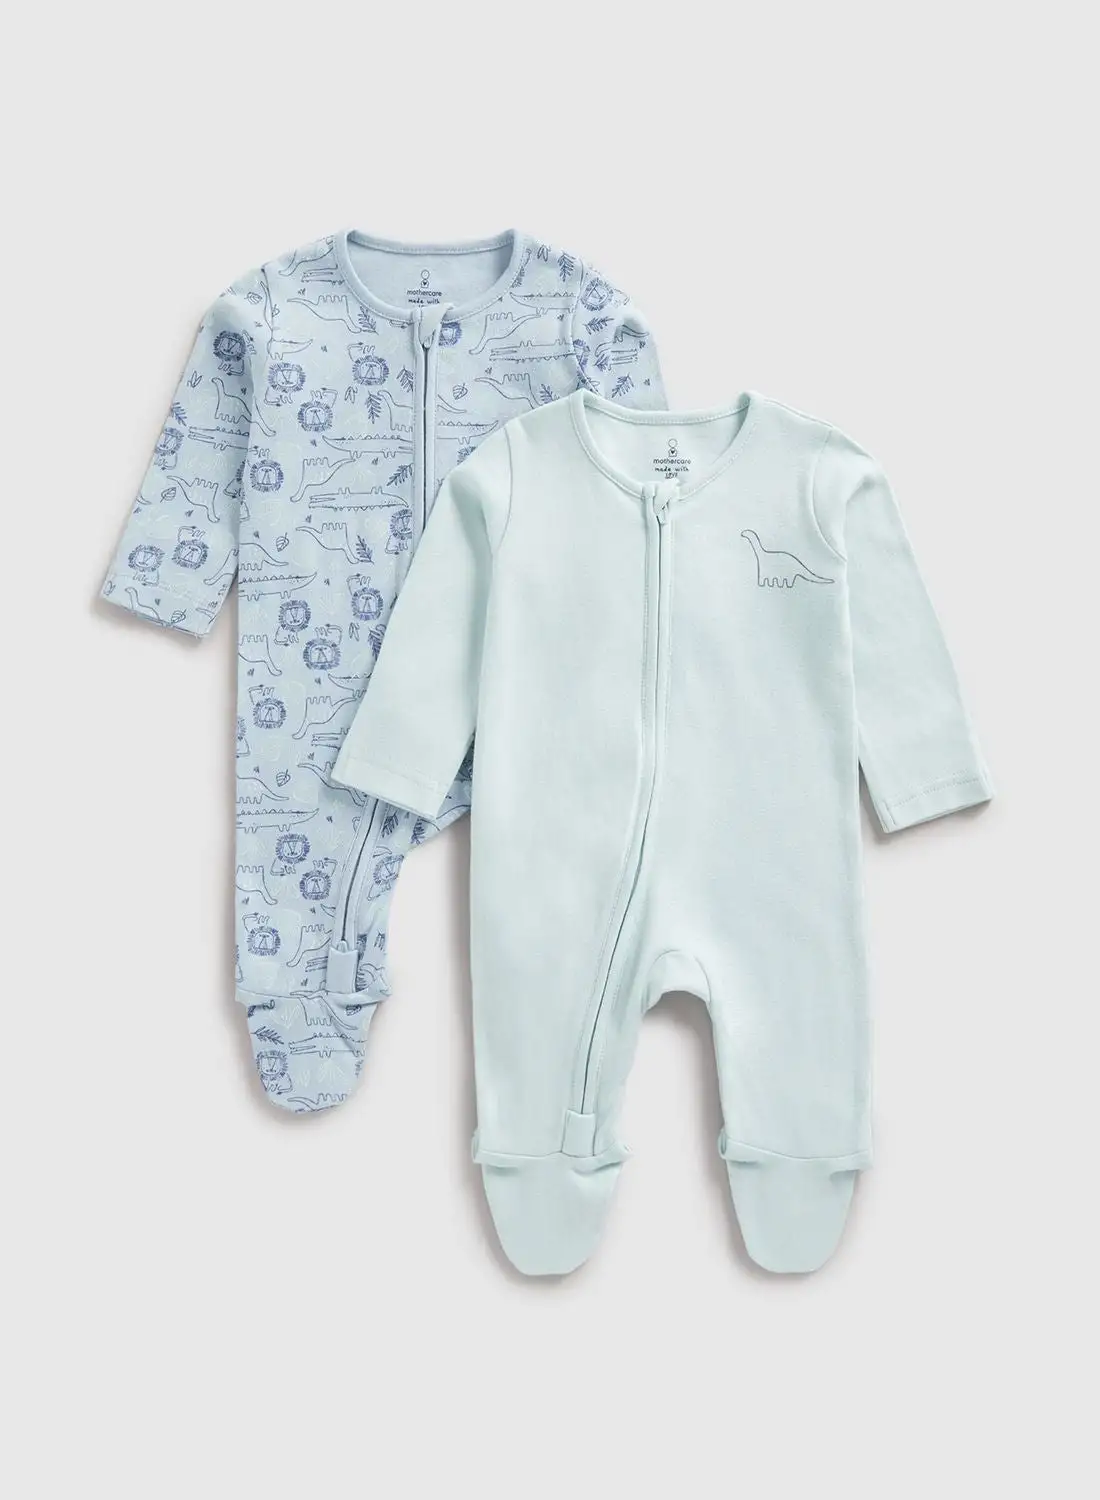 mothercare Infant 2 Set Bodysuits